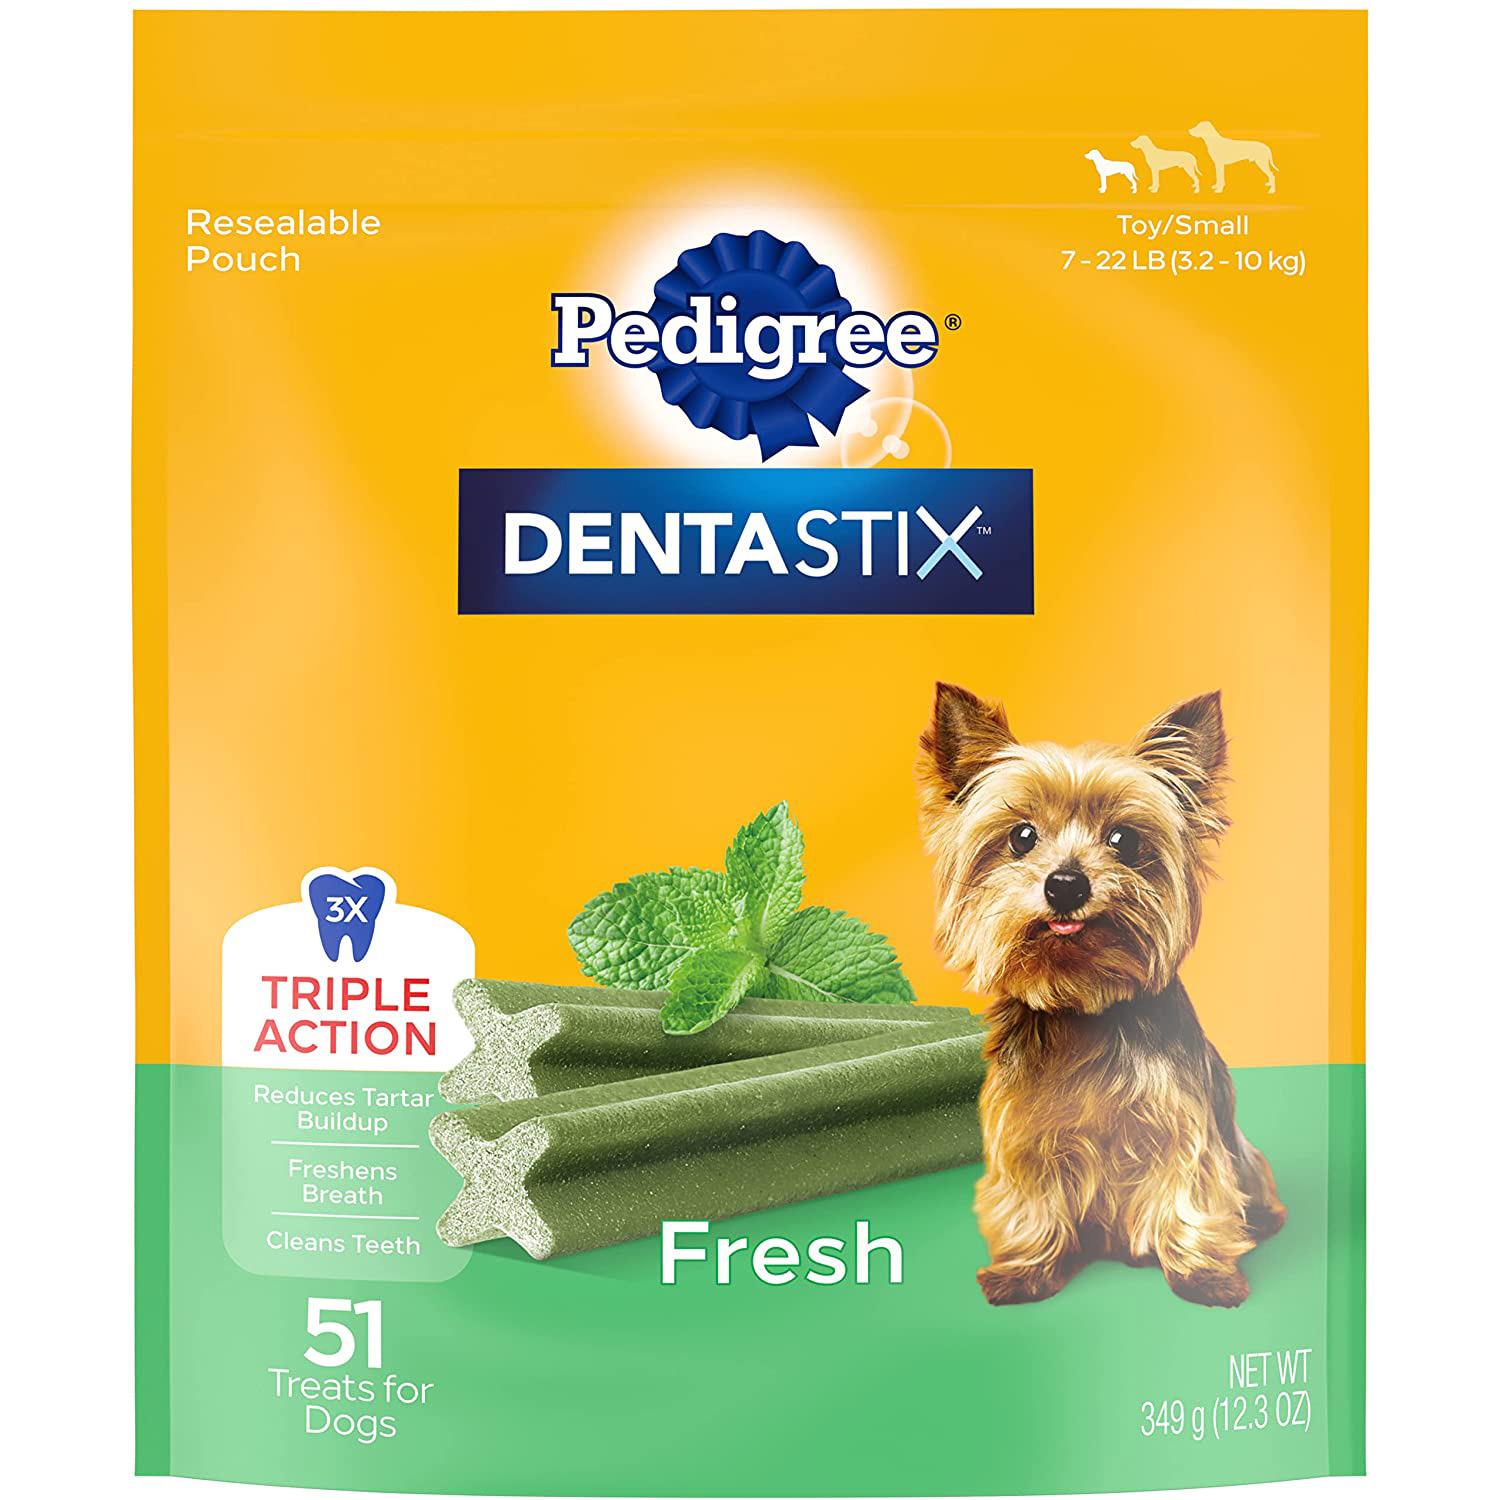 51 Pedigree Dentastix Fresh Dog Treats for $5.20 Shipped